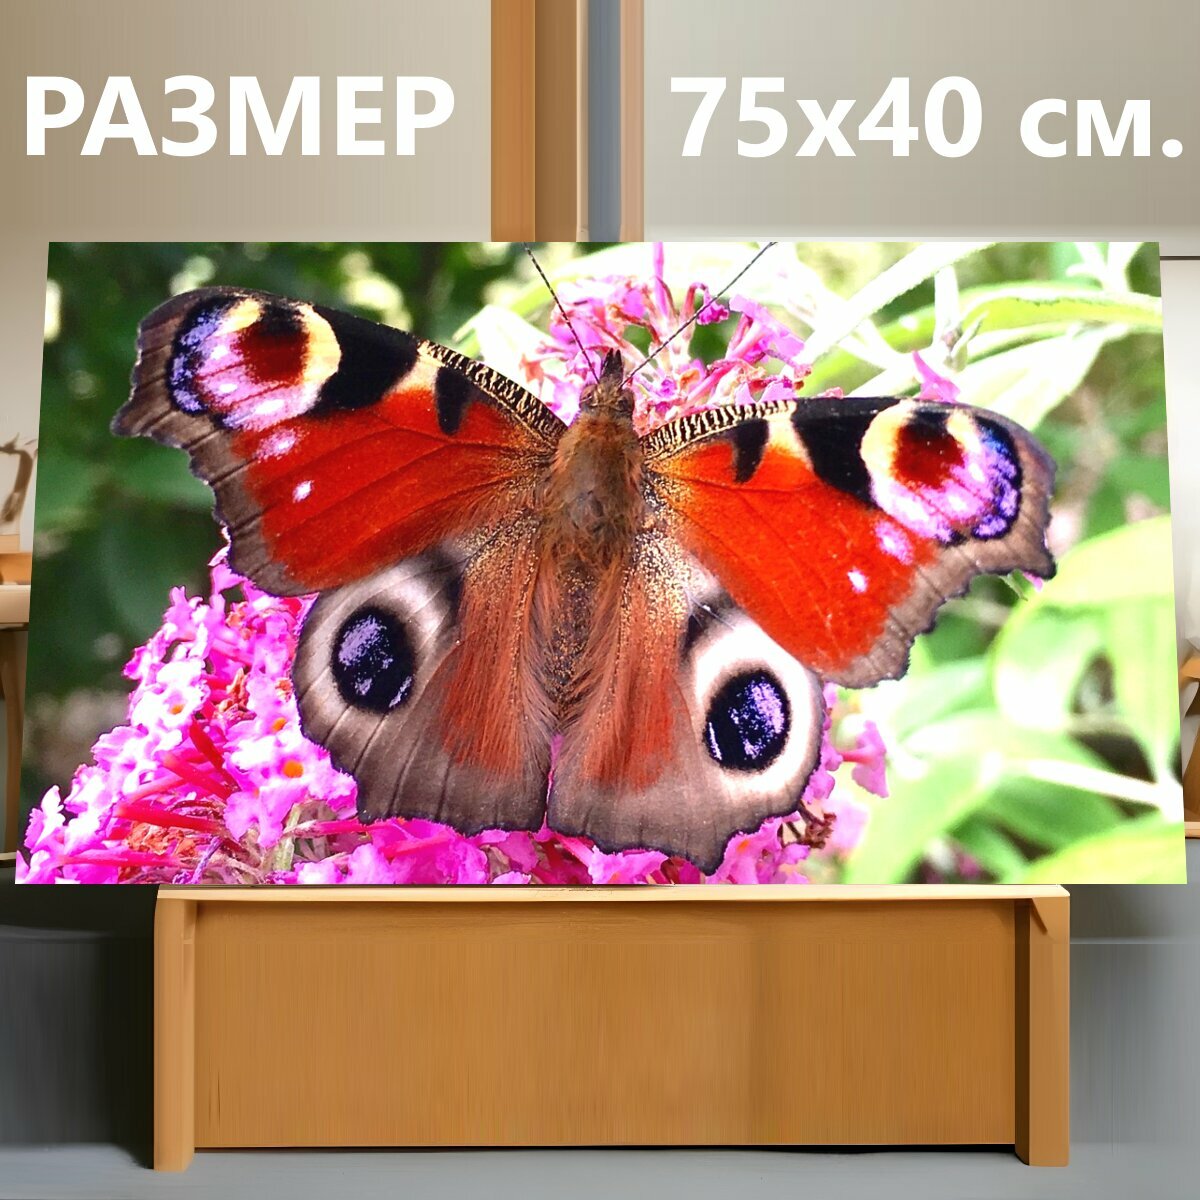 Картина на холсте "Сад, павлинья бабочка, бабочка" на подрамнике 75х40 см. для интерьера